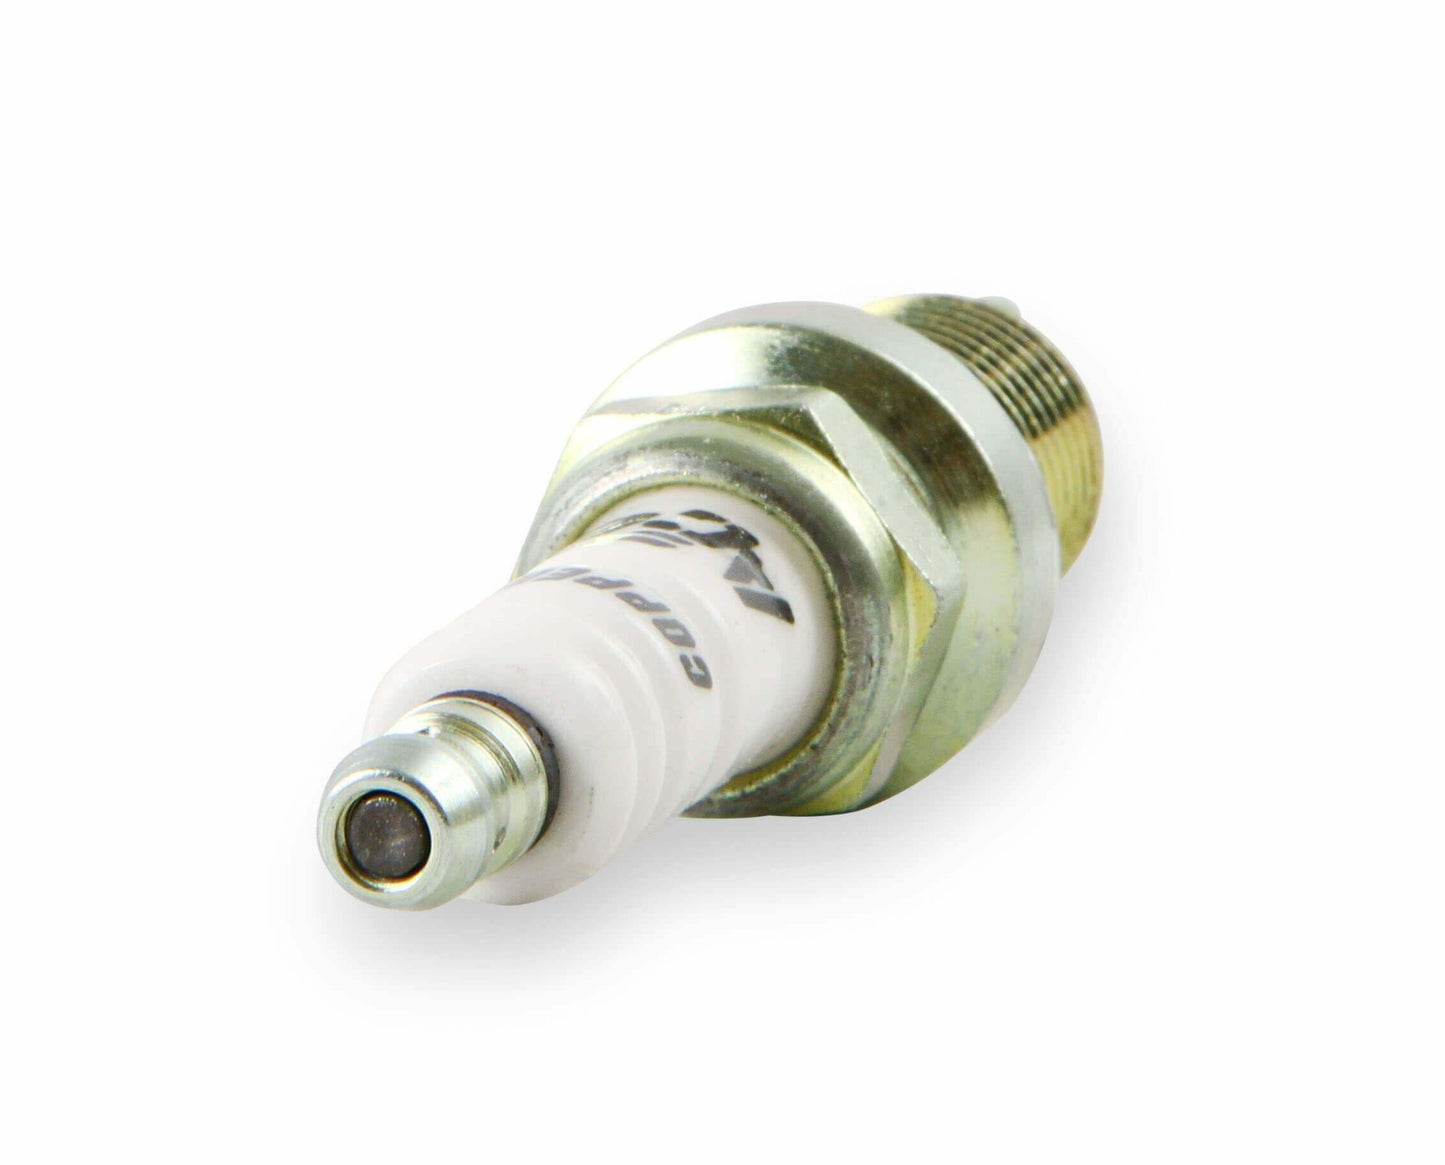 HP Copper Spark Plug - Shorty - 0416S-4